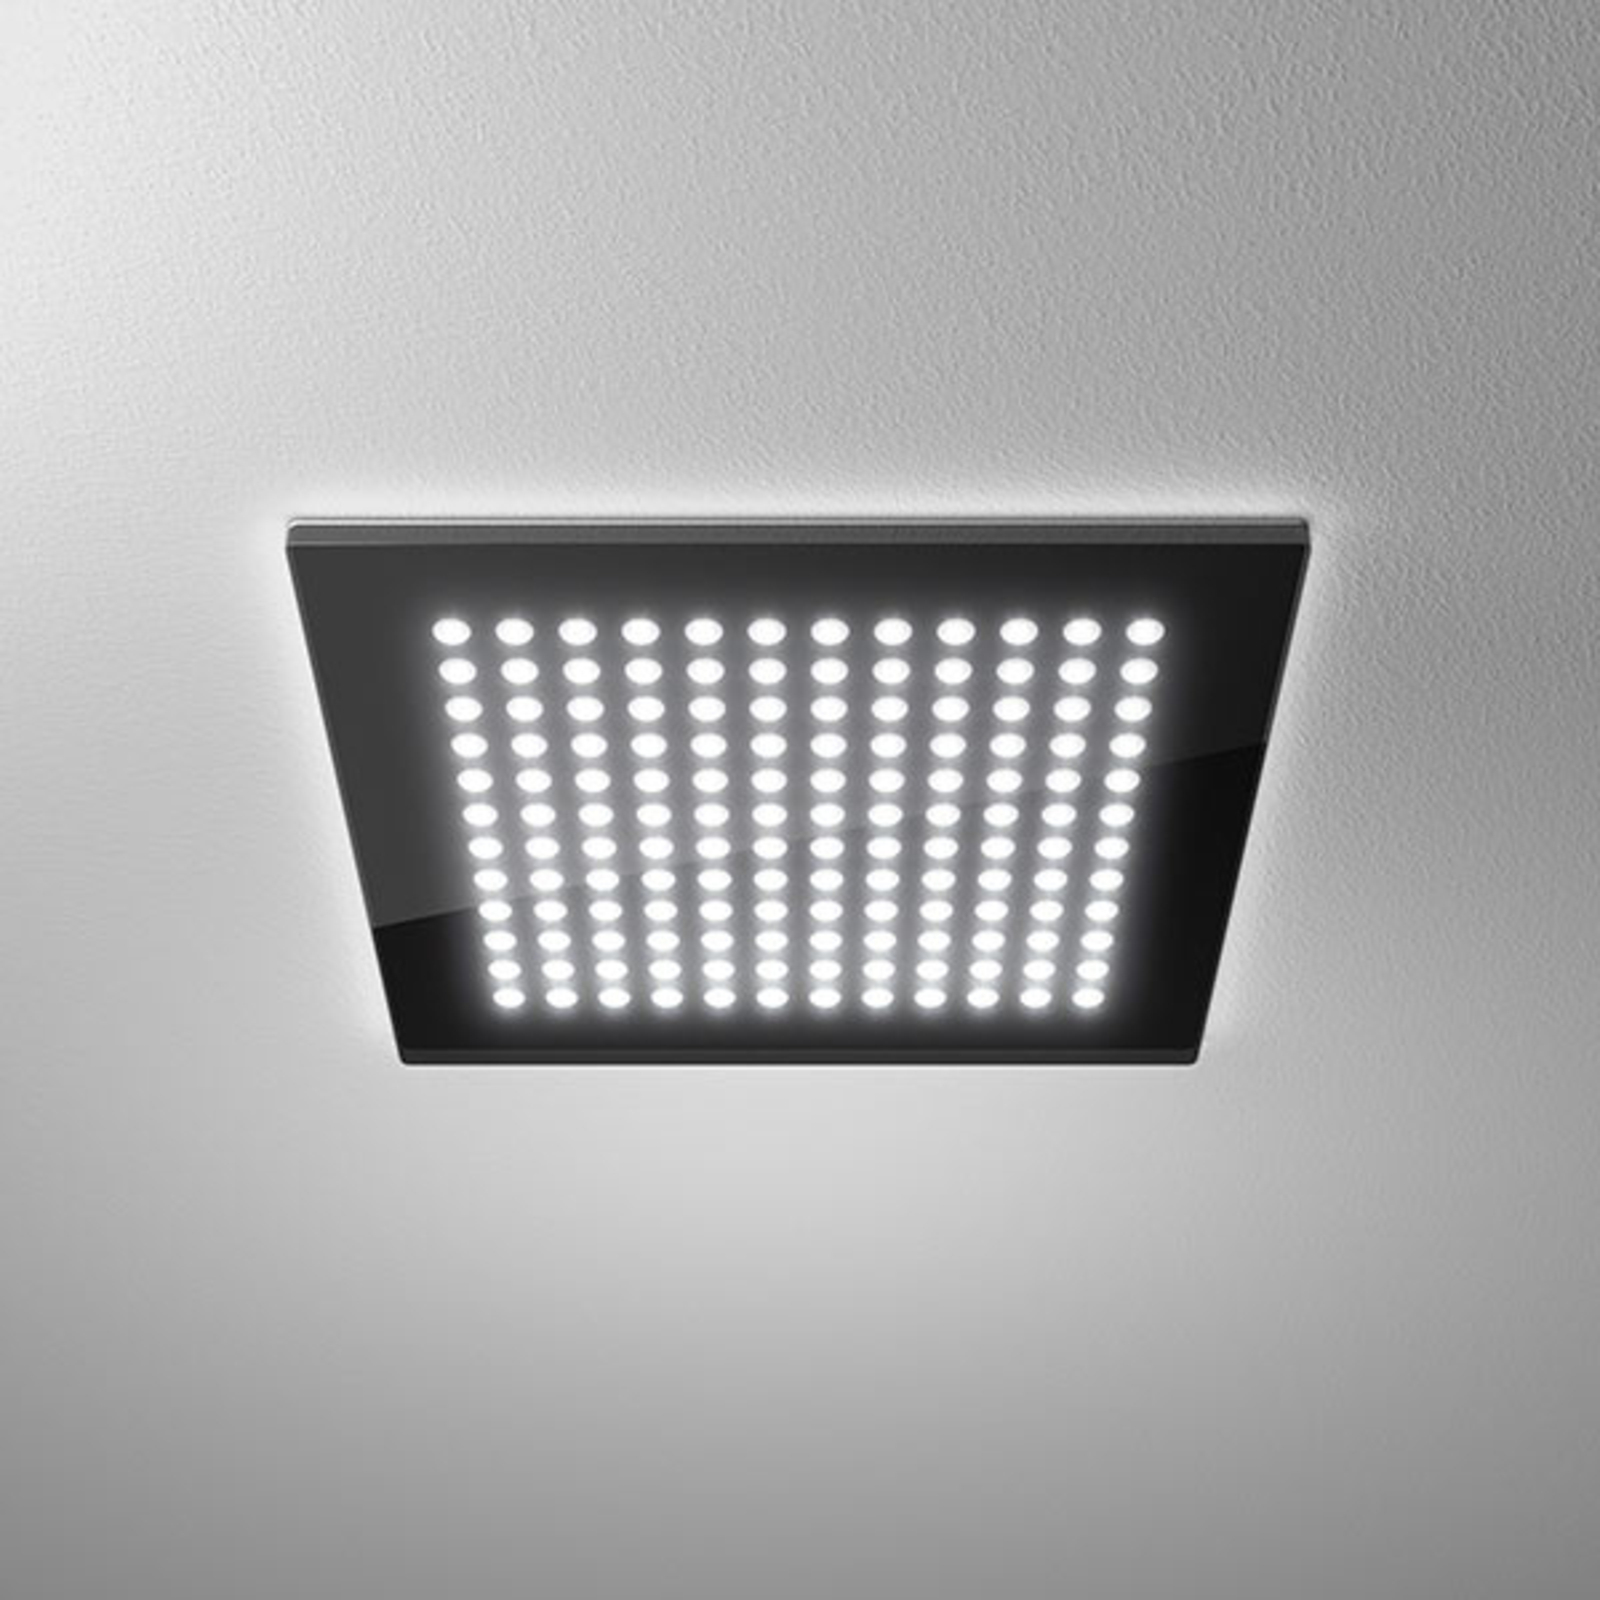 LED downlight Domino Flat Square, 26 x 26 cm, 22 W